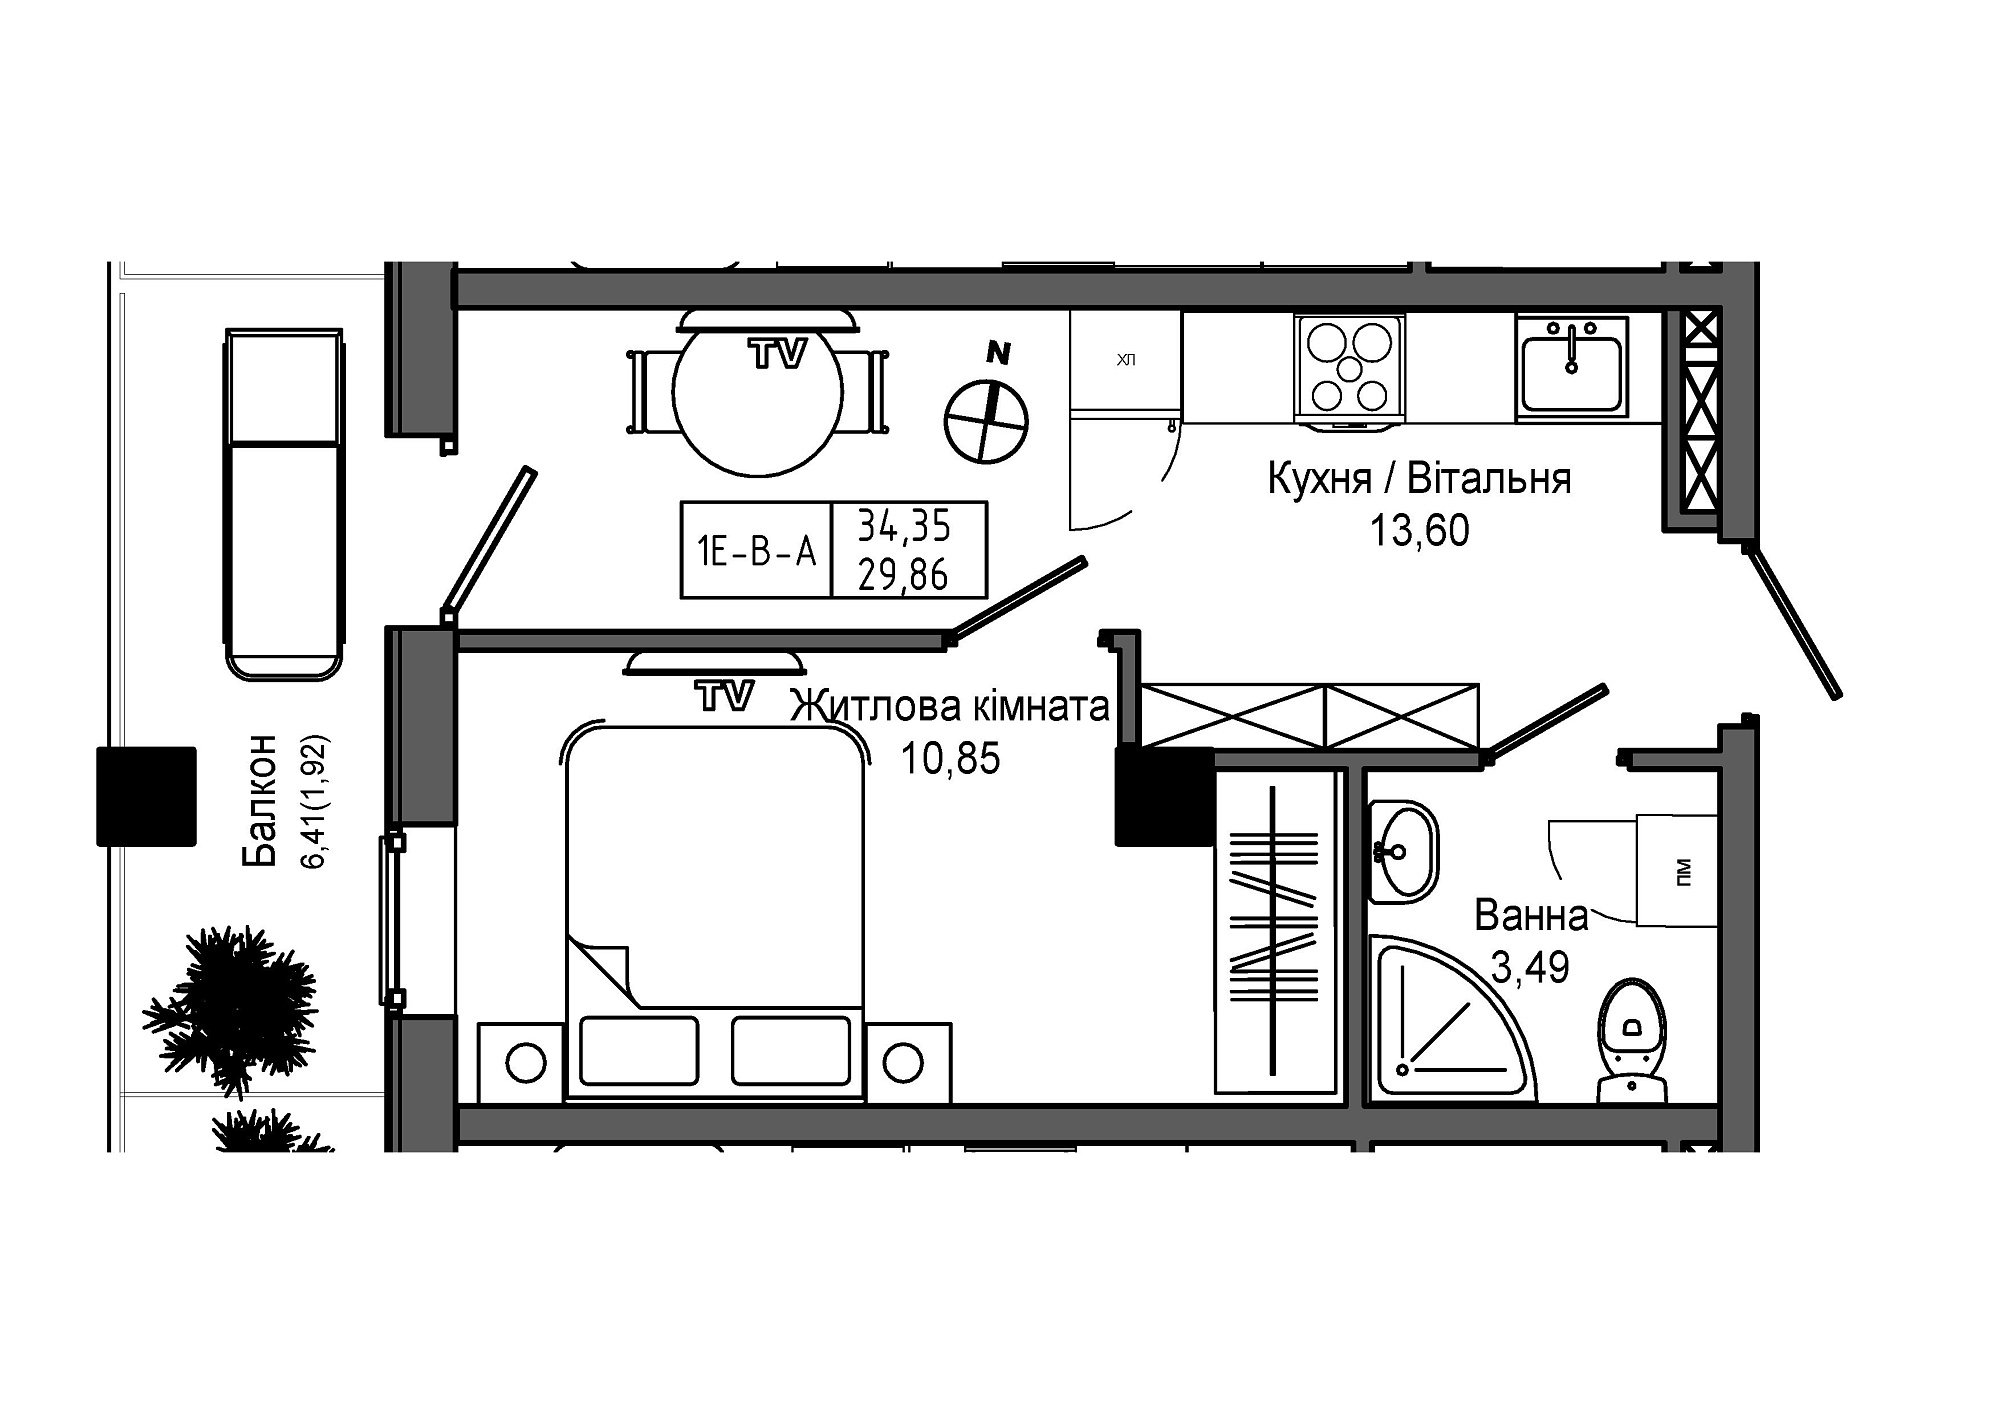 Планування 1-к квартира площею 29.86м2, UM-006-01/0014.